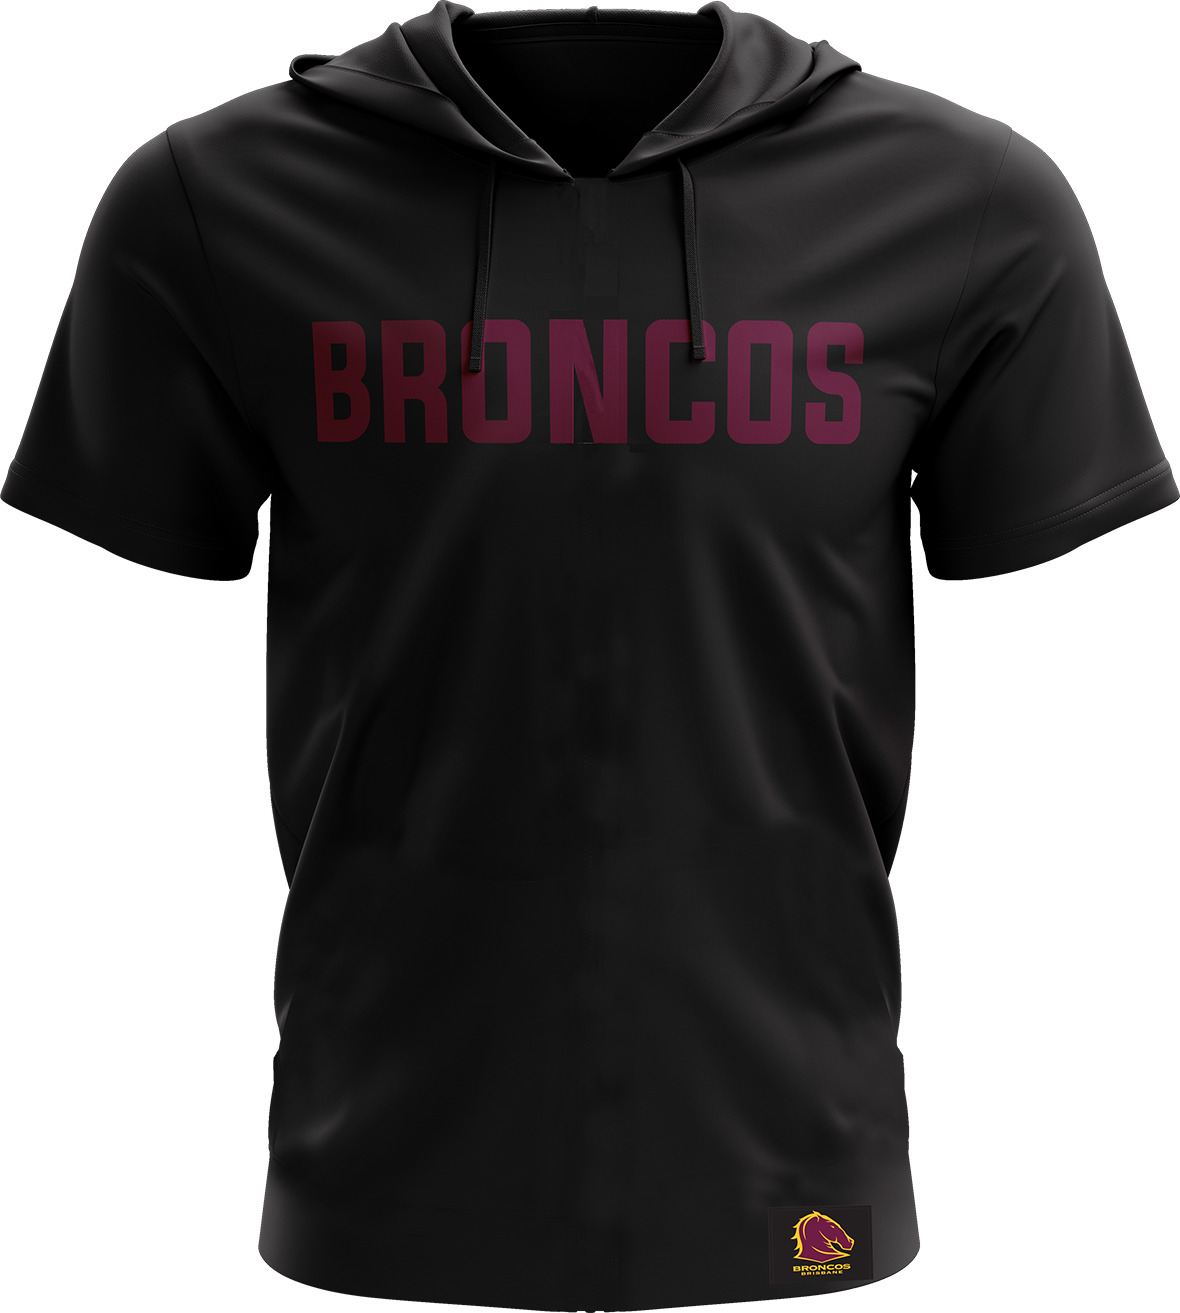 Details about   Brisbane Broncos NRL 2019 Classic Varsity T Shirt Sizes S-5XL W19 